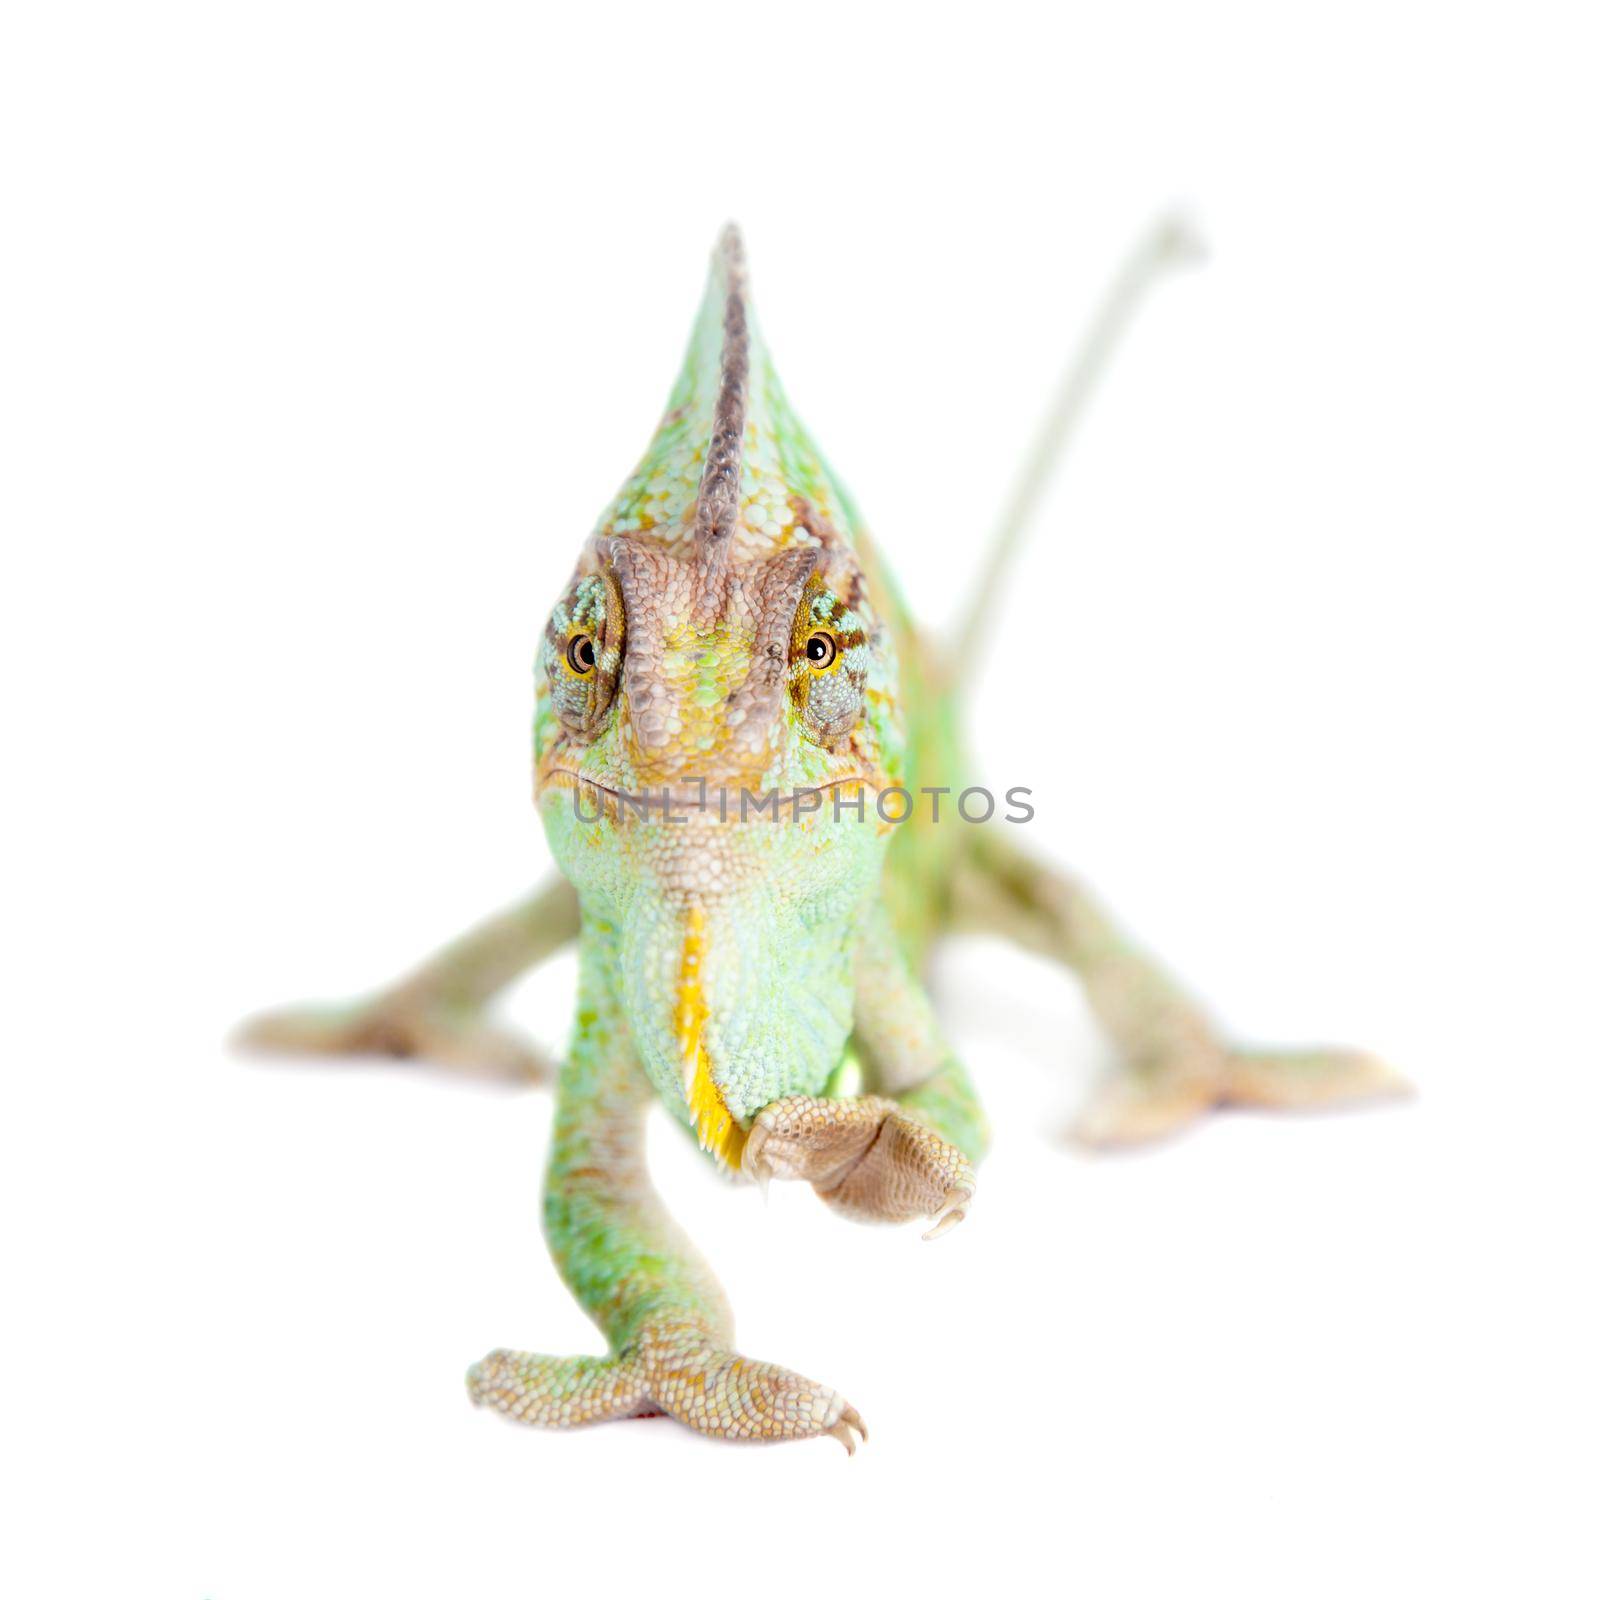 The veiled chameleon, Chamaeleo calyptratus, male by RosaJay